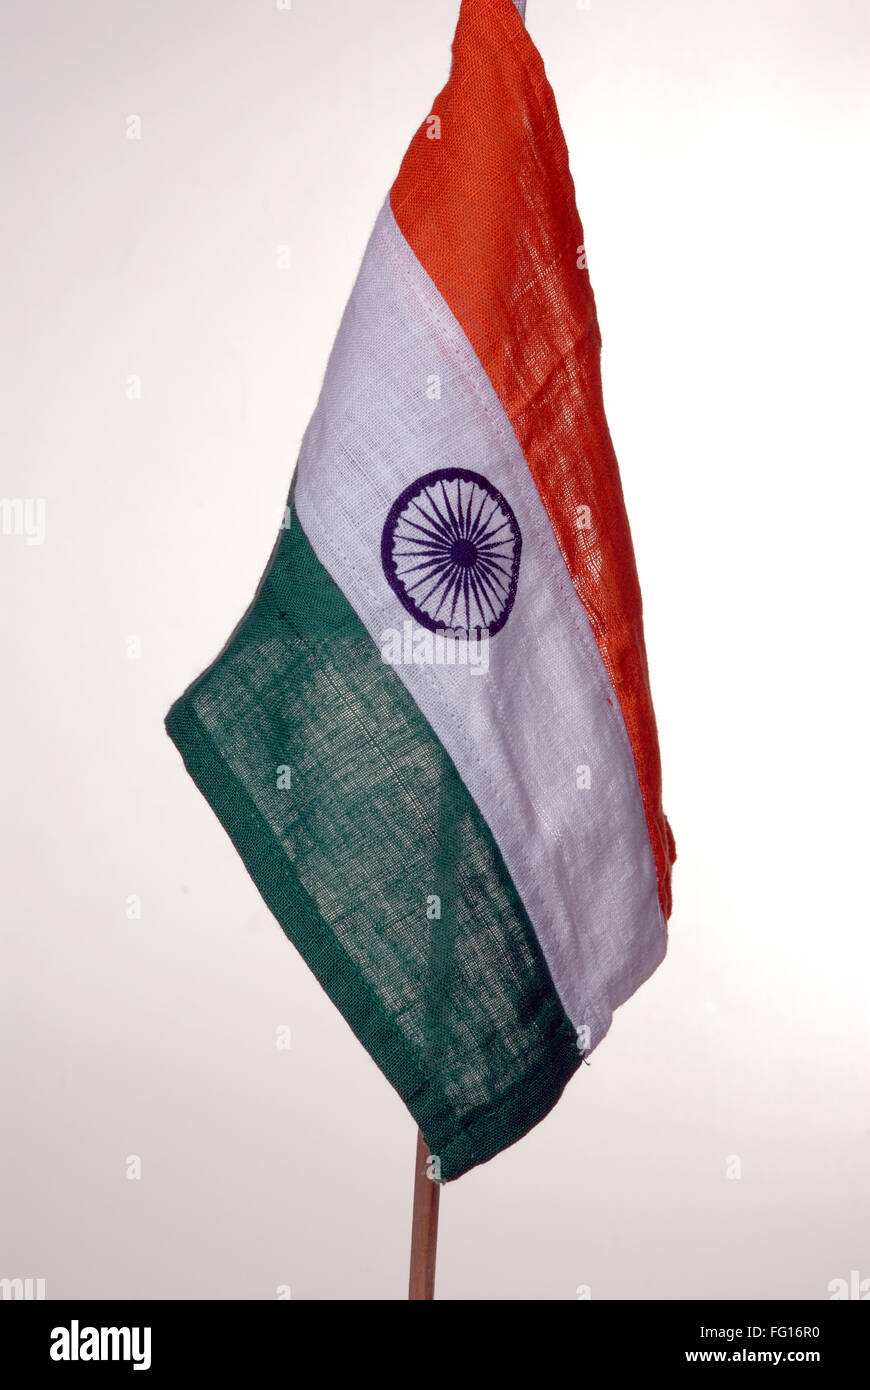 Indian flag on white background Stock Photo - Alamy